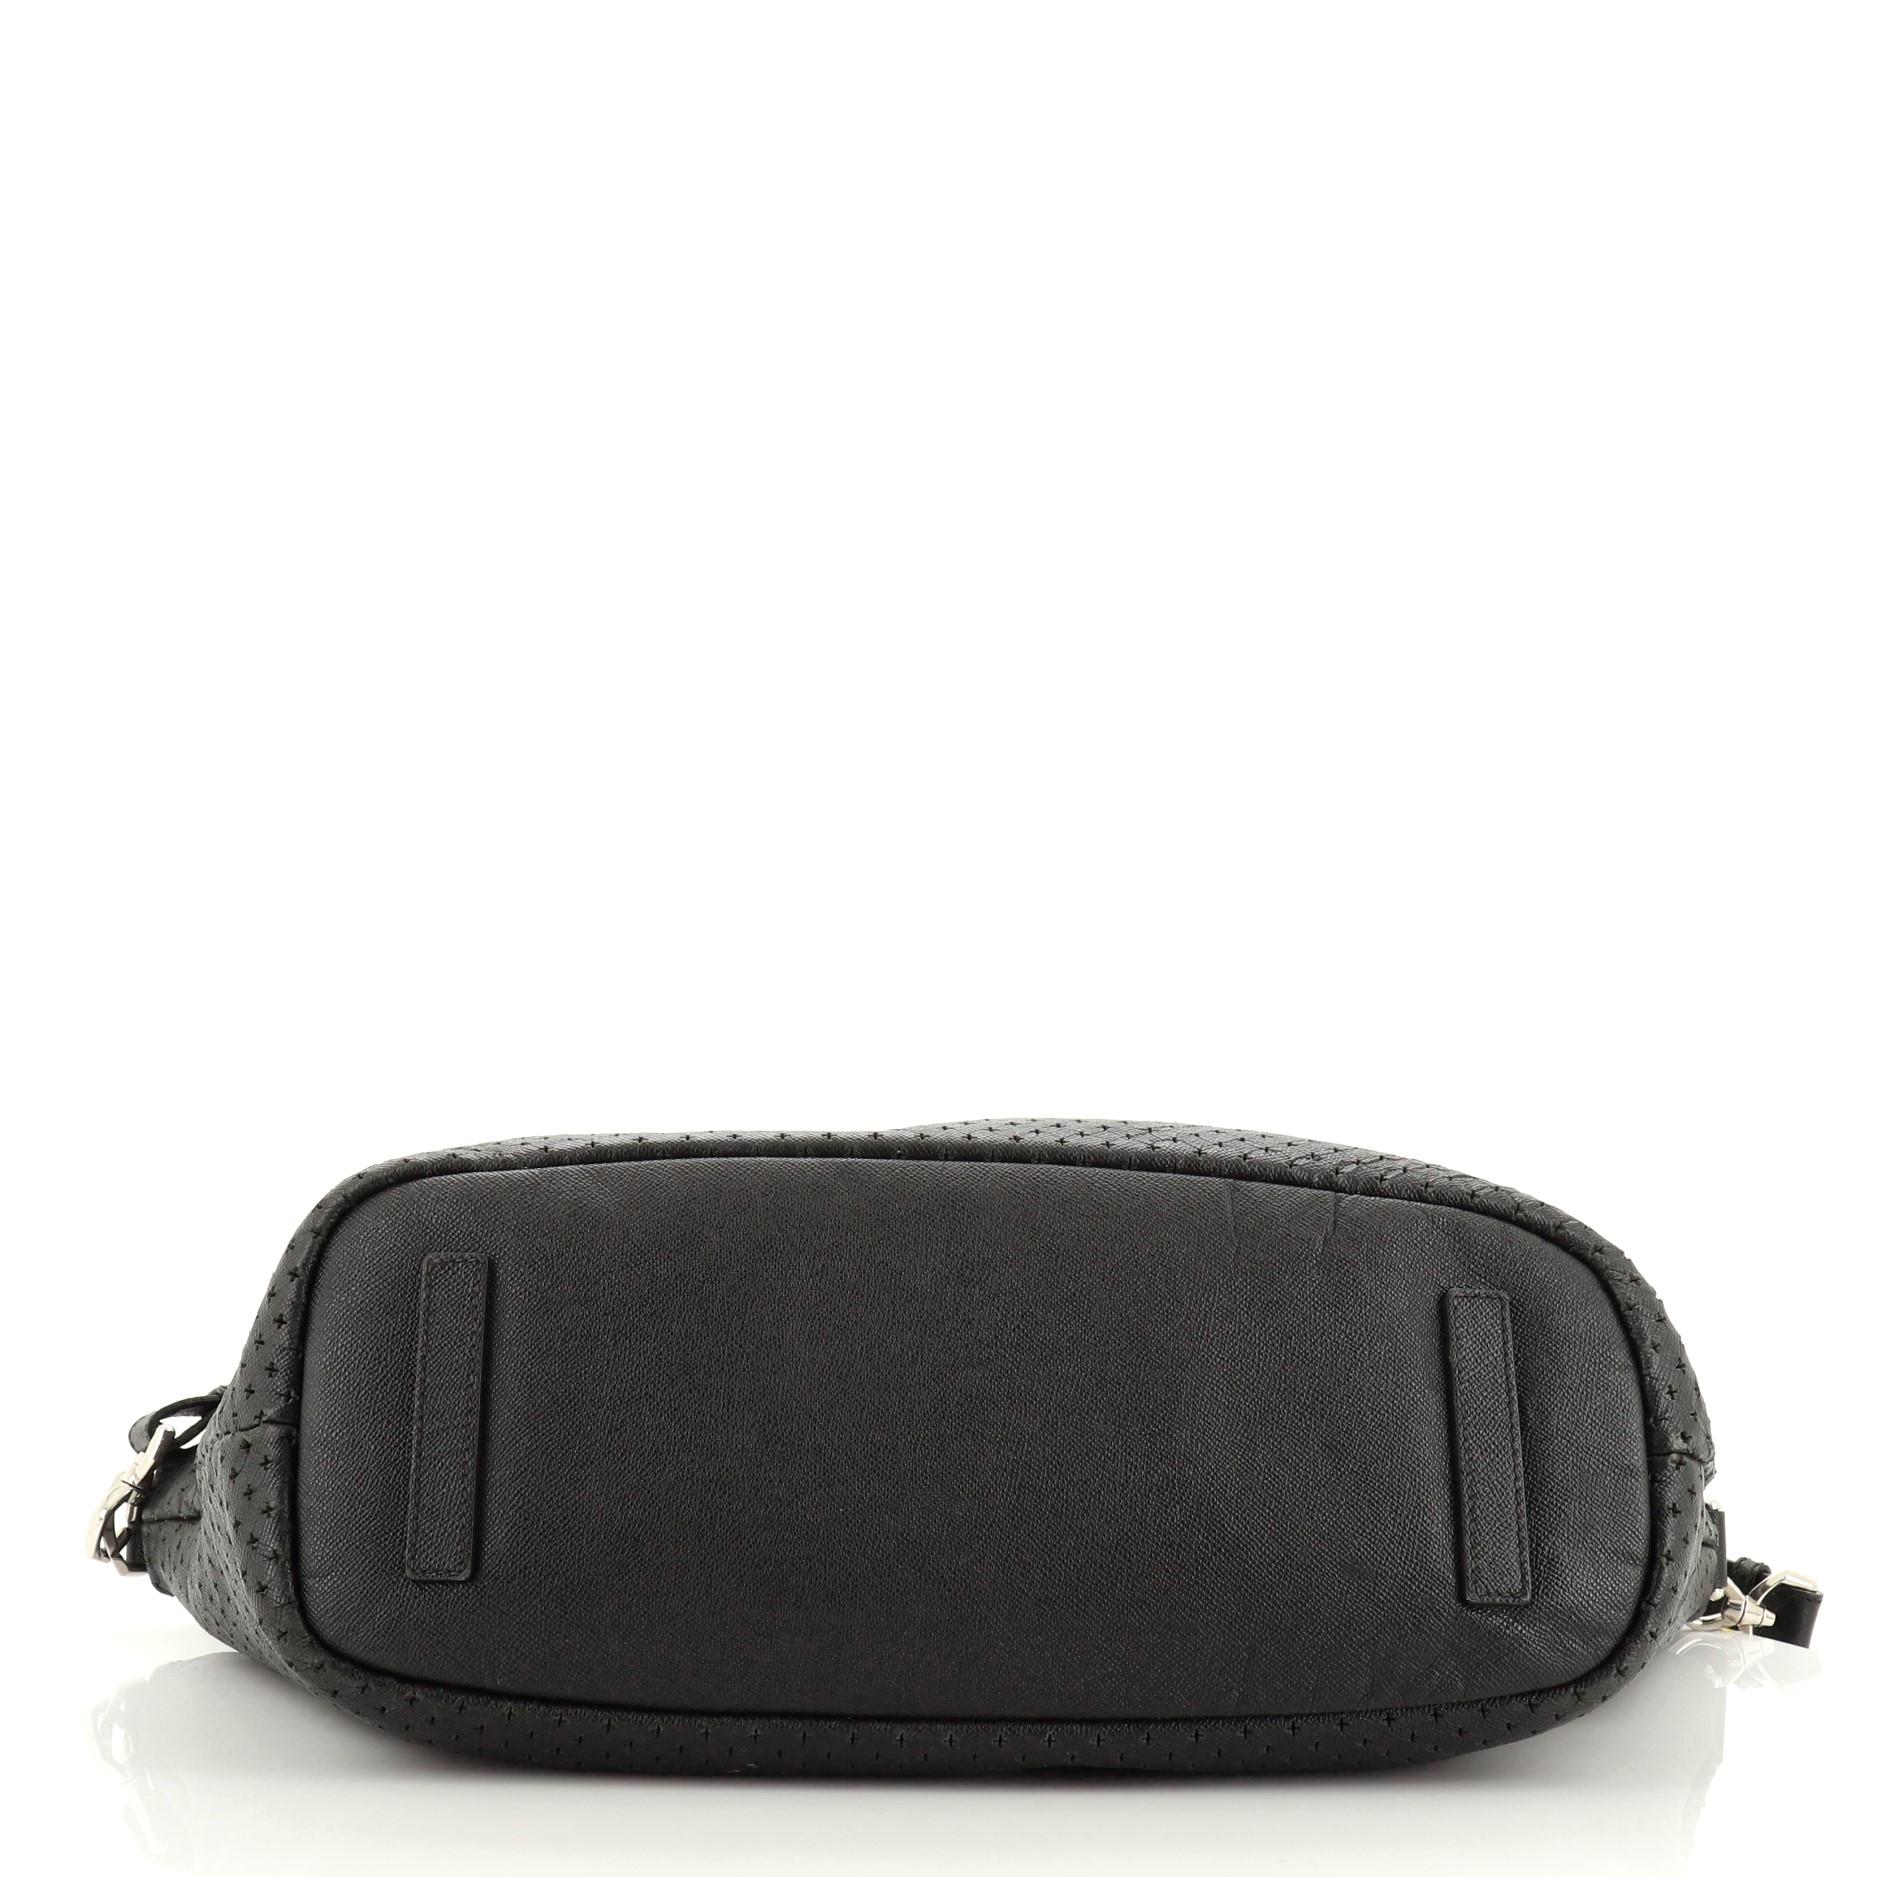 Black Givenchy Nightingale Satchel Perforated Leather Large